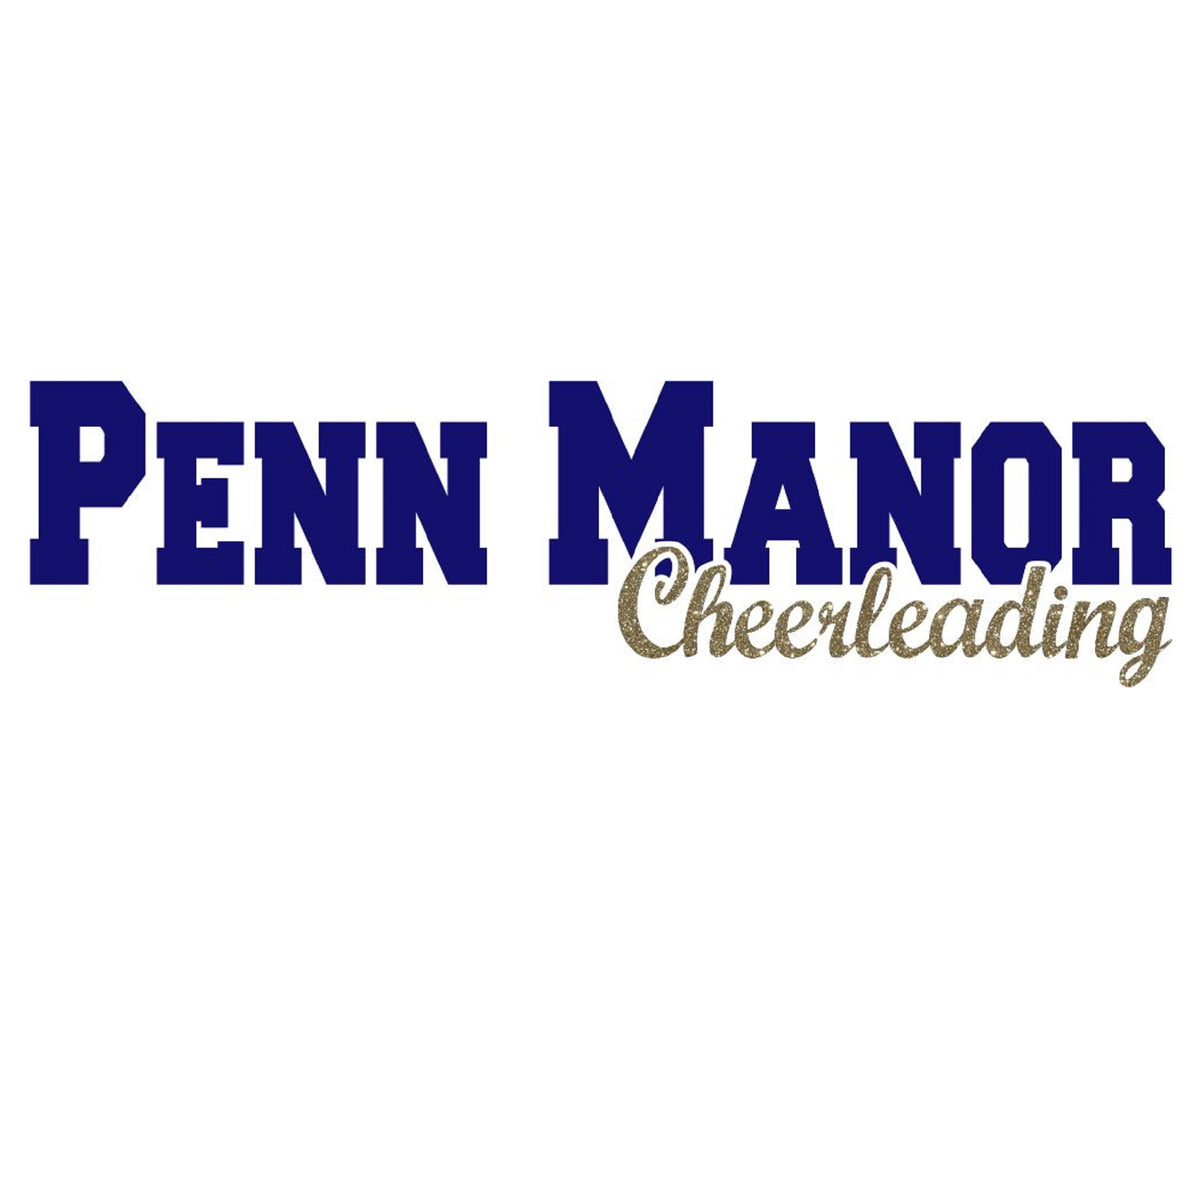 PMJC Cheerleading